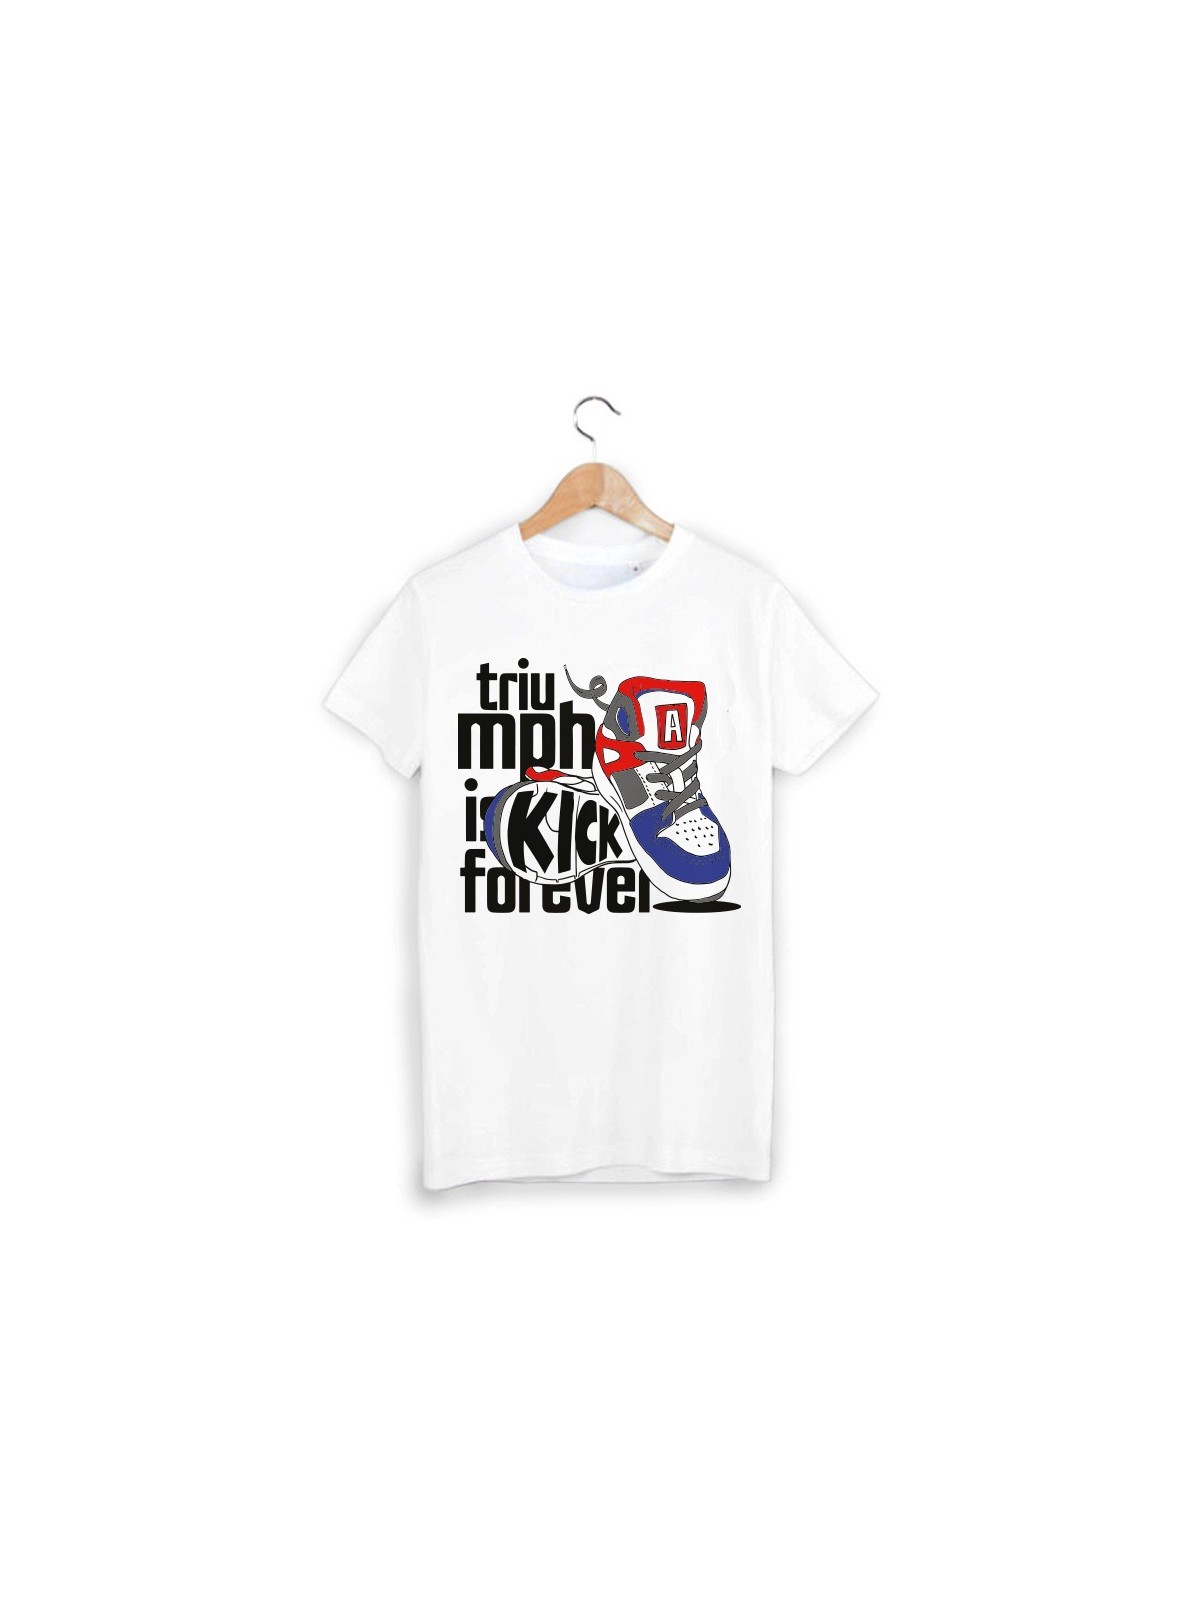 T-Shirt basket hip-hop ref 1570